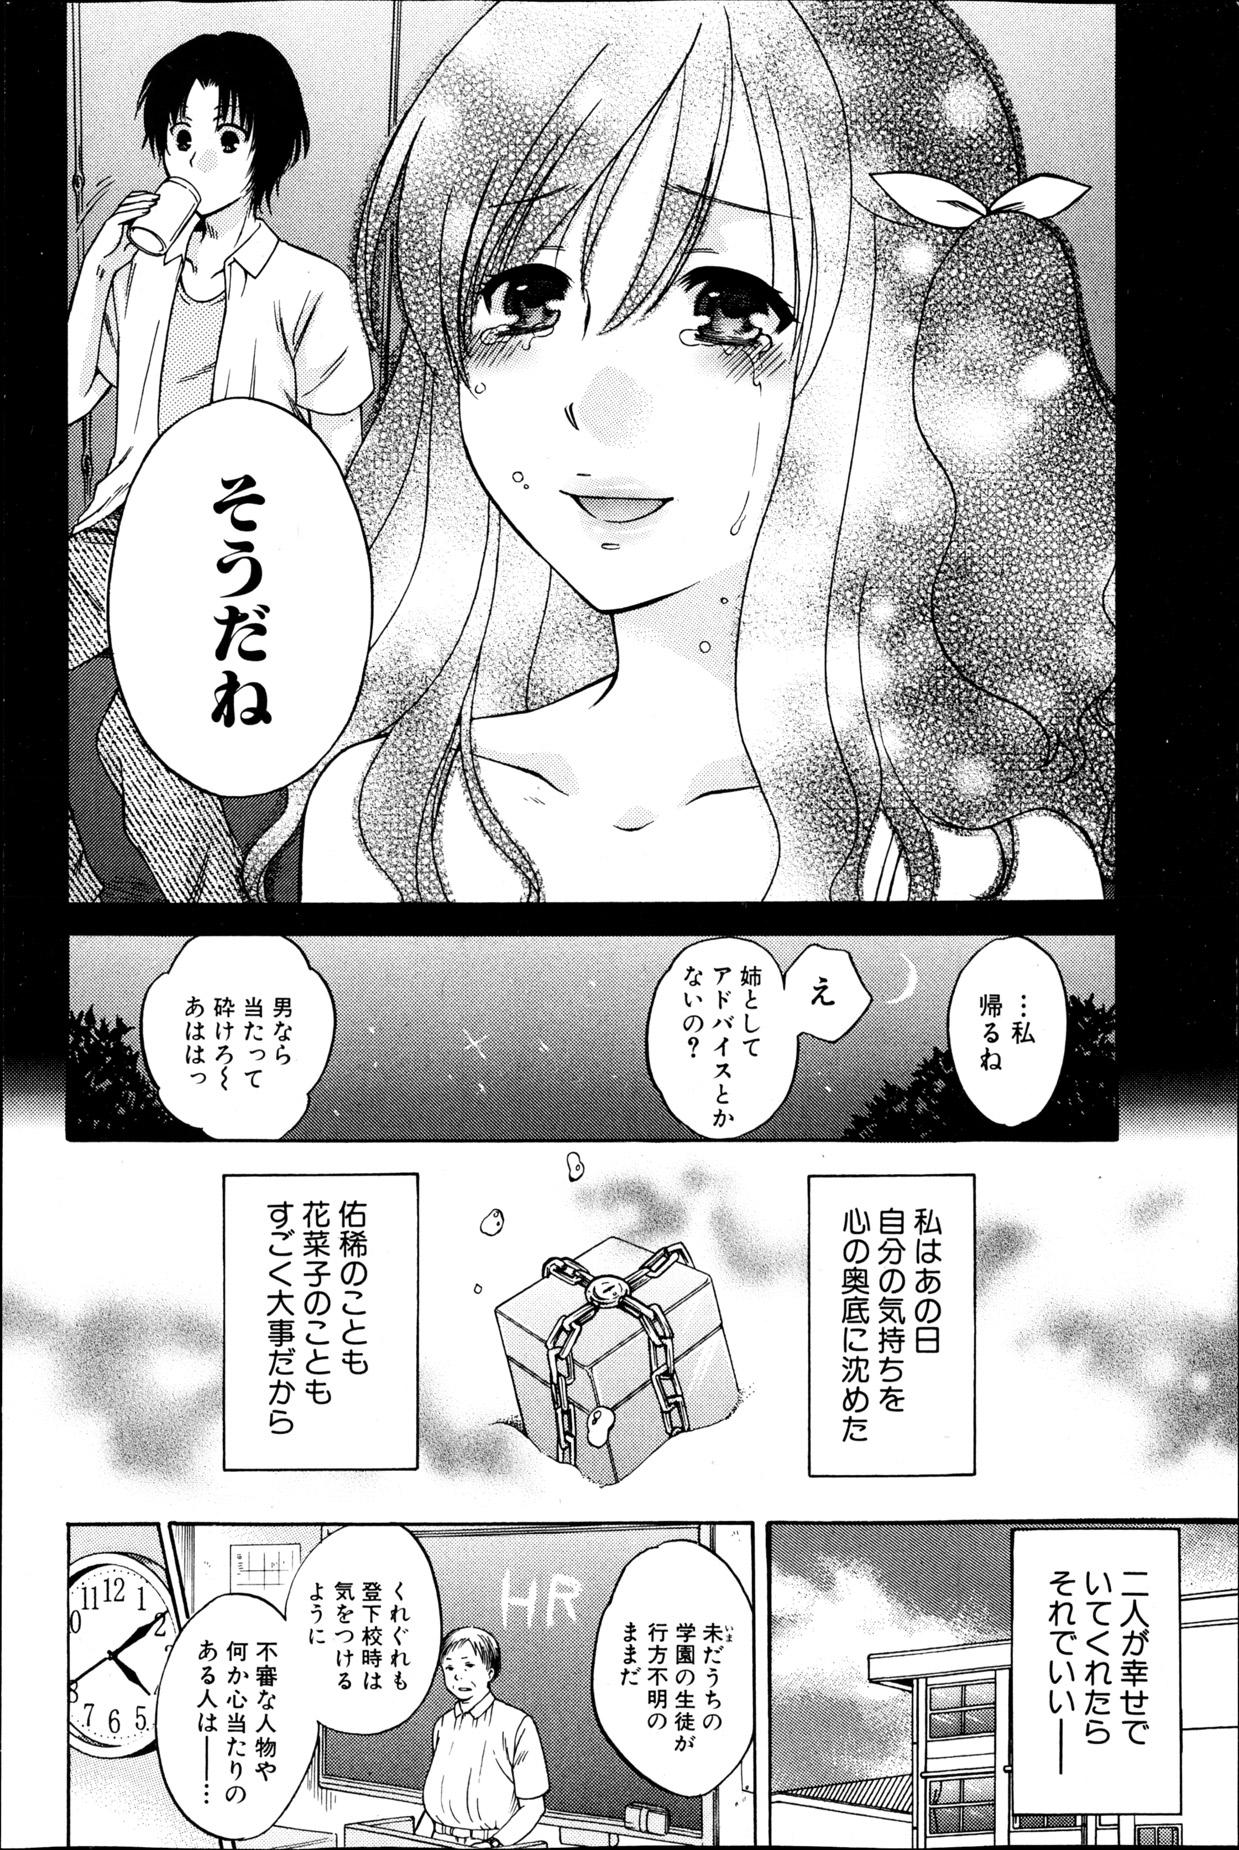 Seduction Yoru ga Akenai. Freaky - Page 6